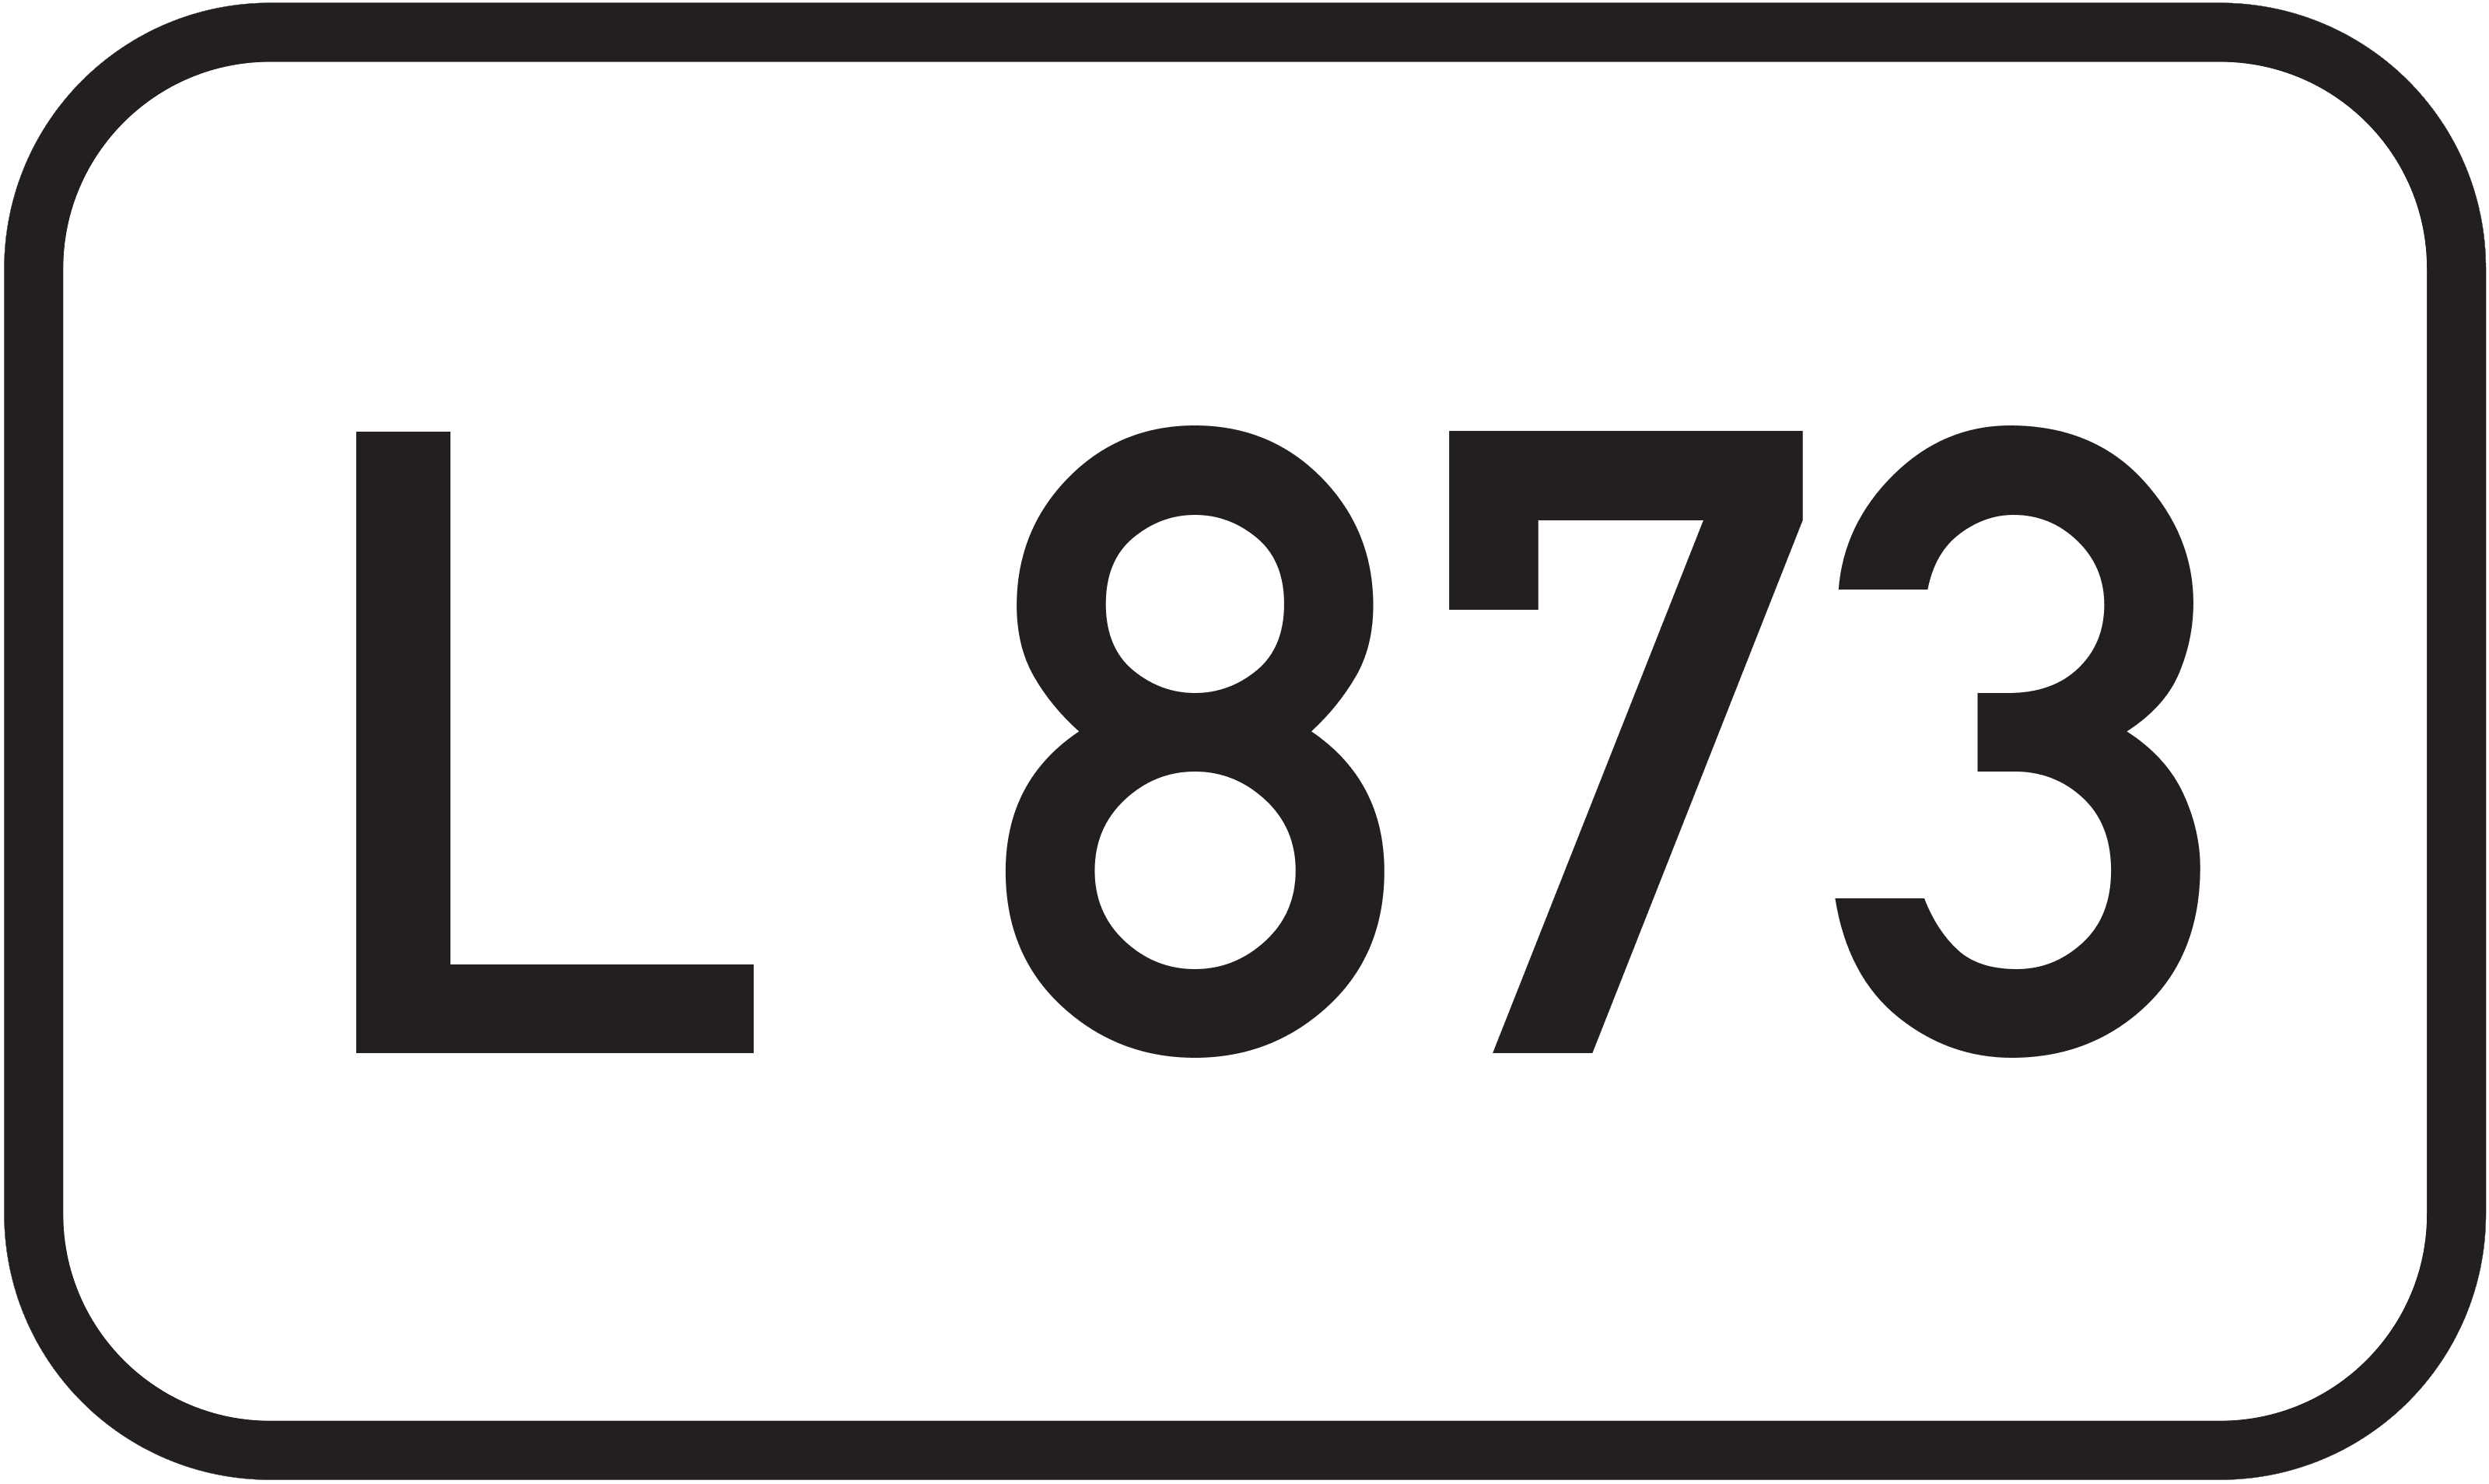 Straßenschild Landesstraße L 873